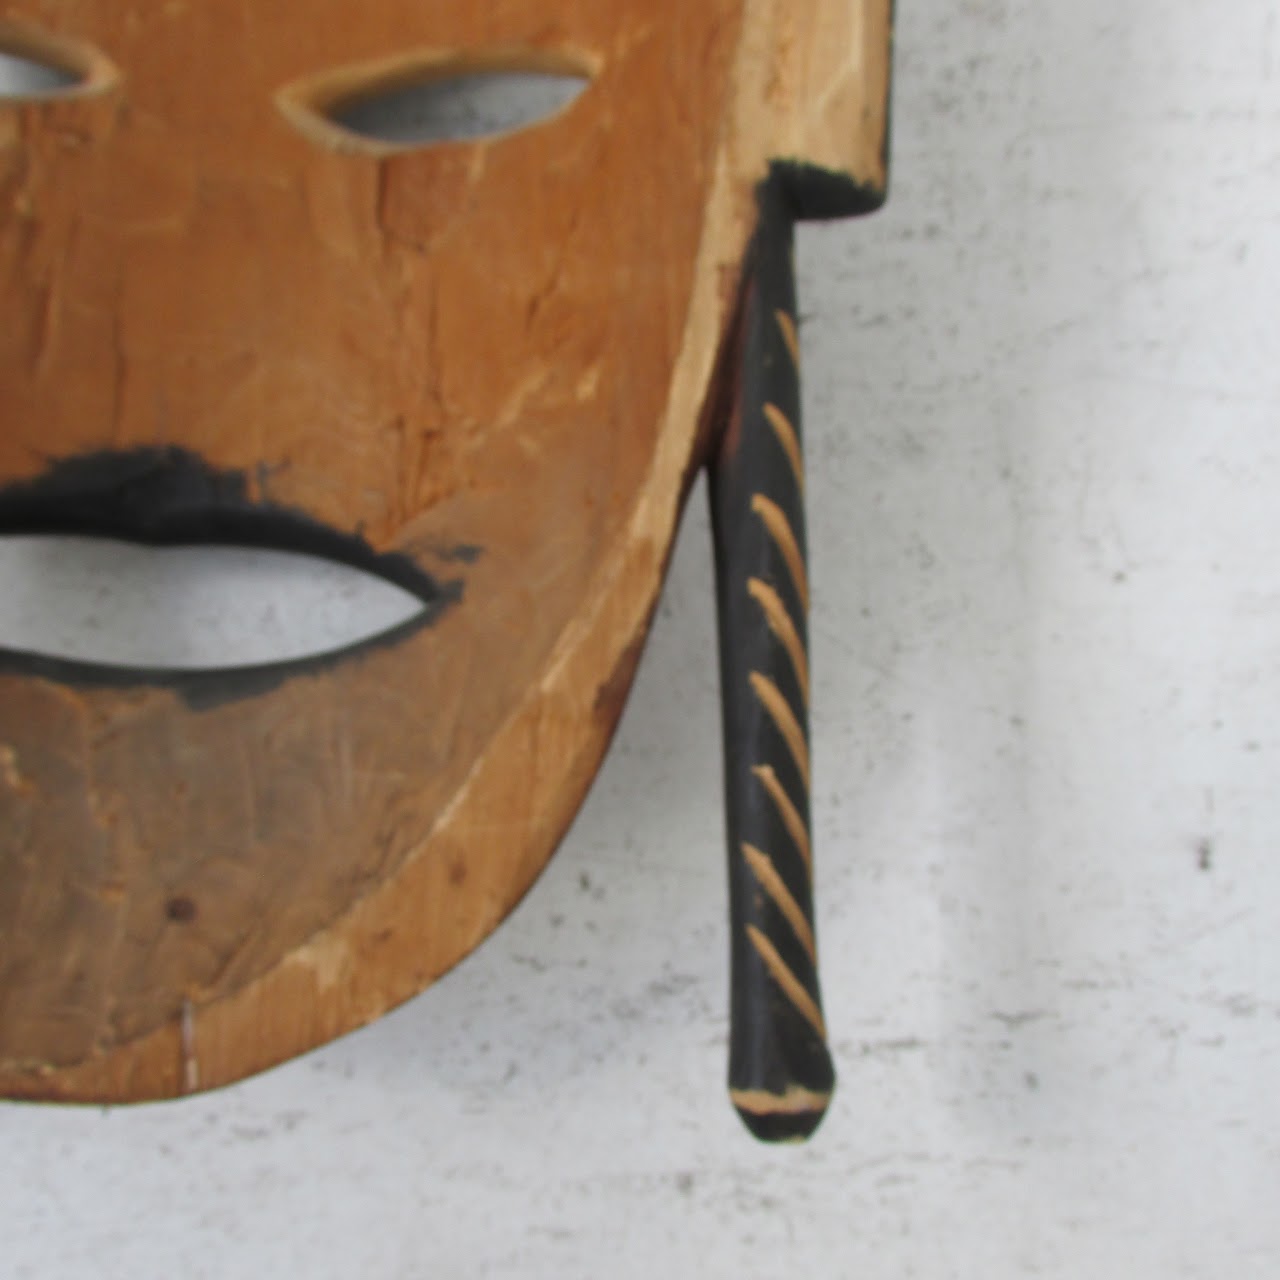 White Pine Decorative Mask